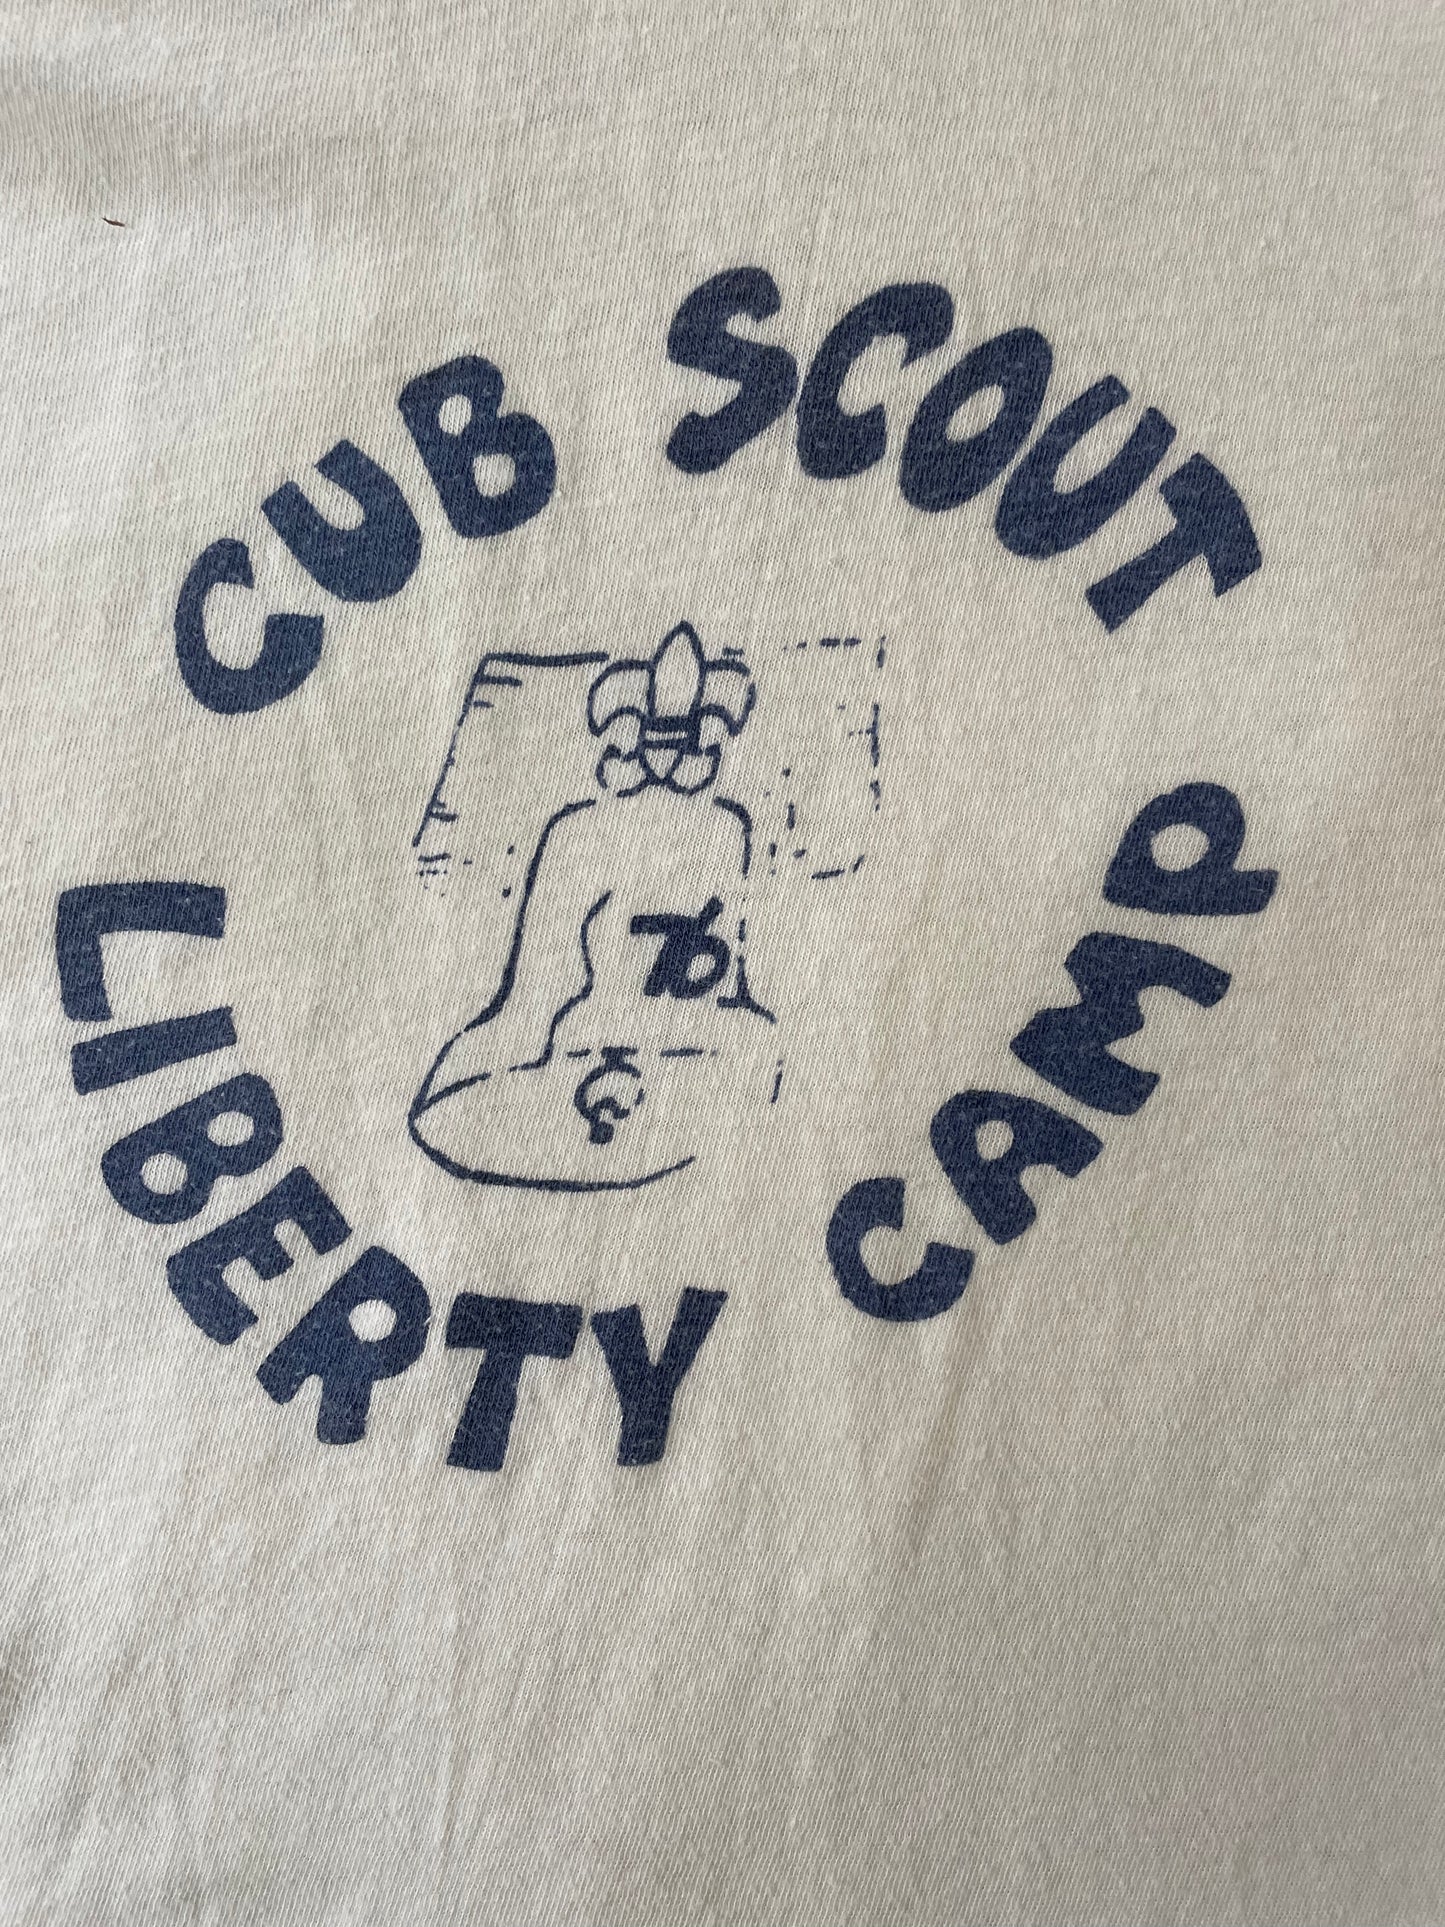 Cub Scout Liberty Camp ‘76 Tee